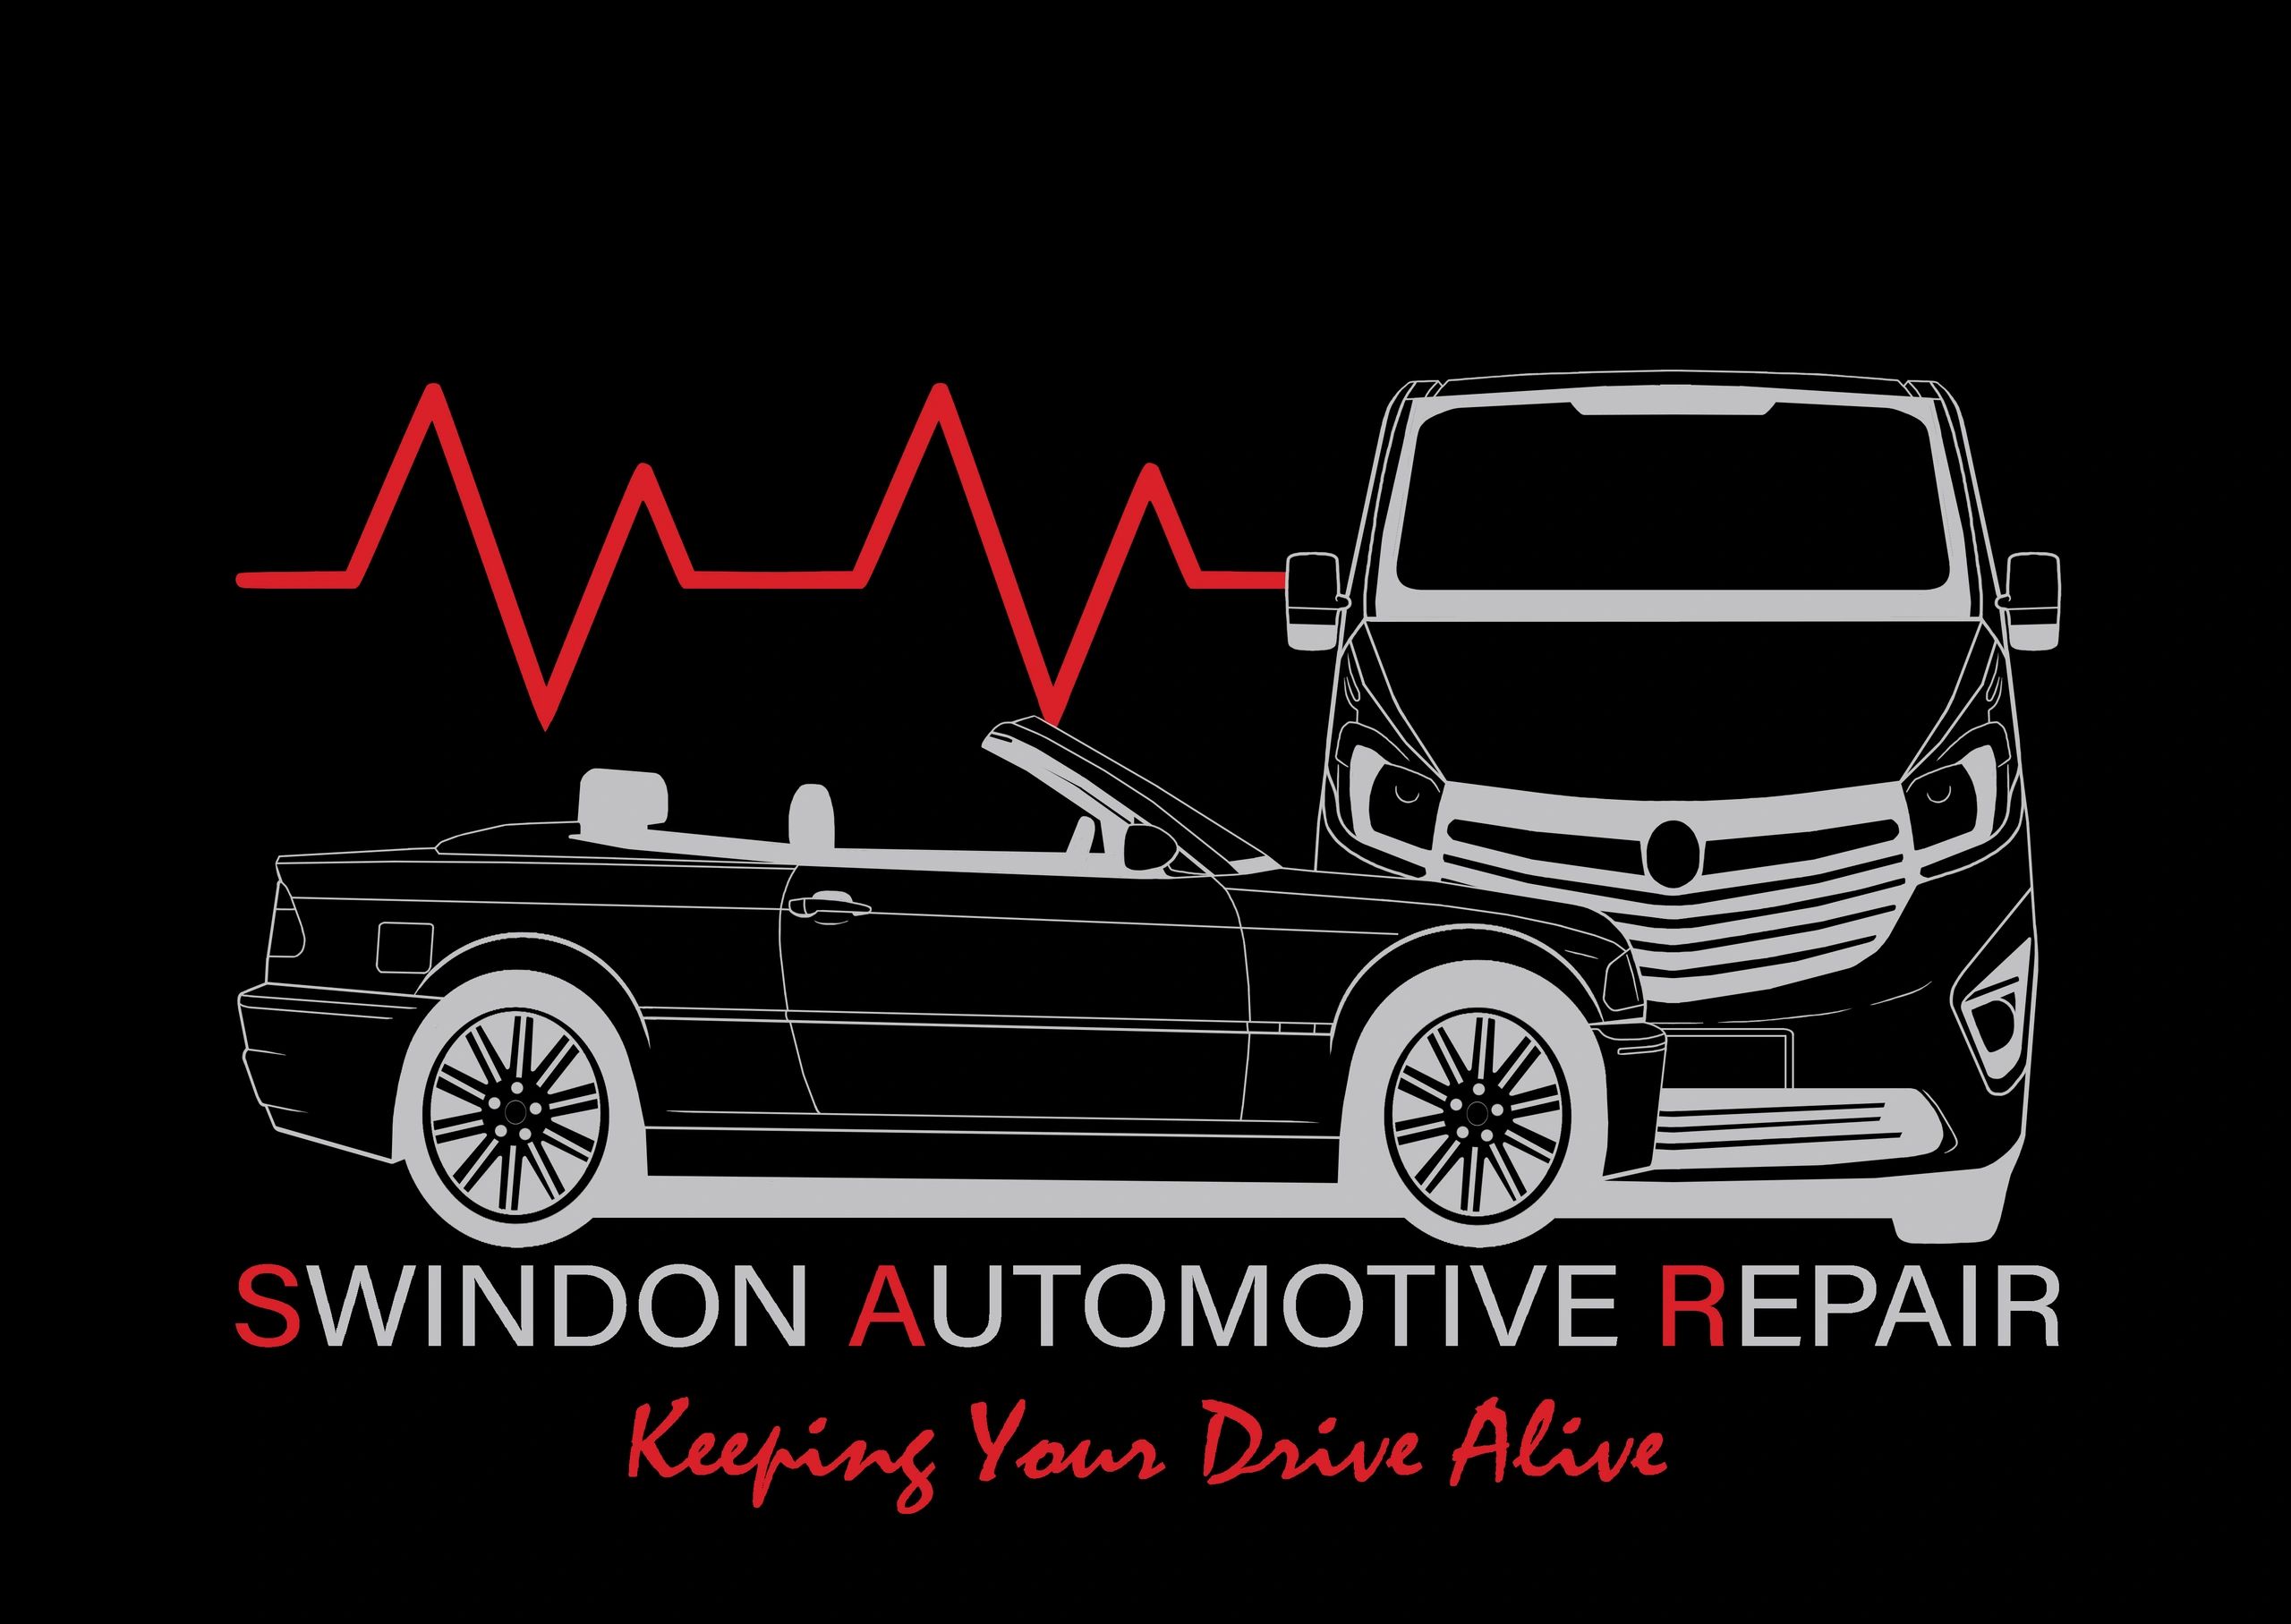 Swindon Automotive Repair logo. Swindon Automotive Repair, keeping your drive alive.